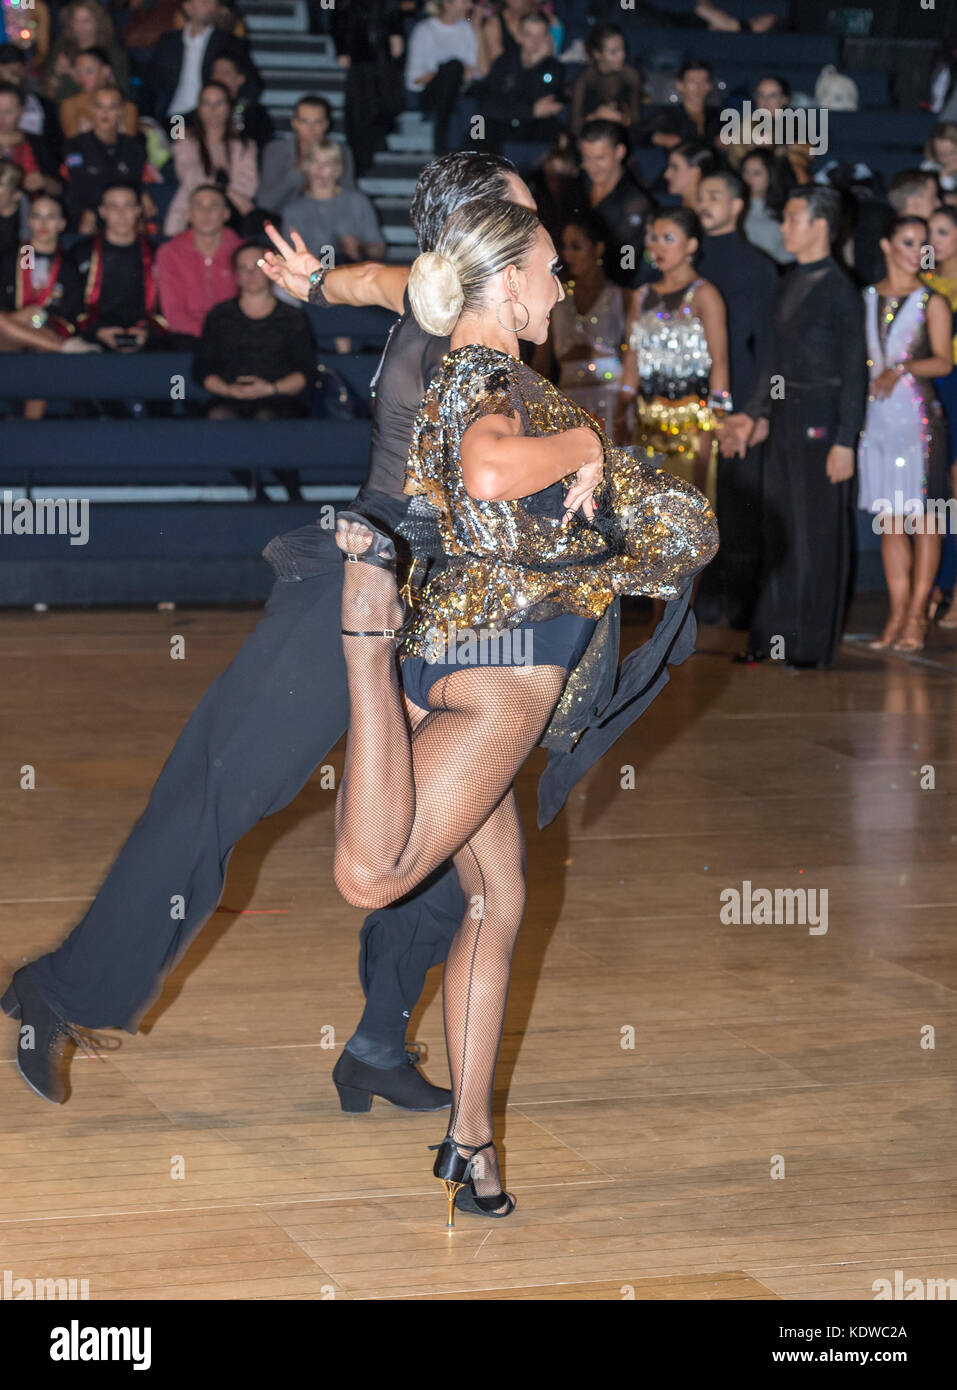 Latin Ballroom dancers at the International Championships, Brentwood Stock Photo